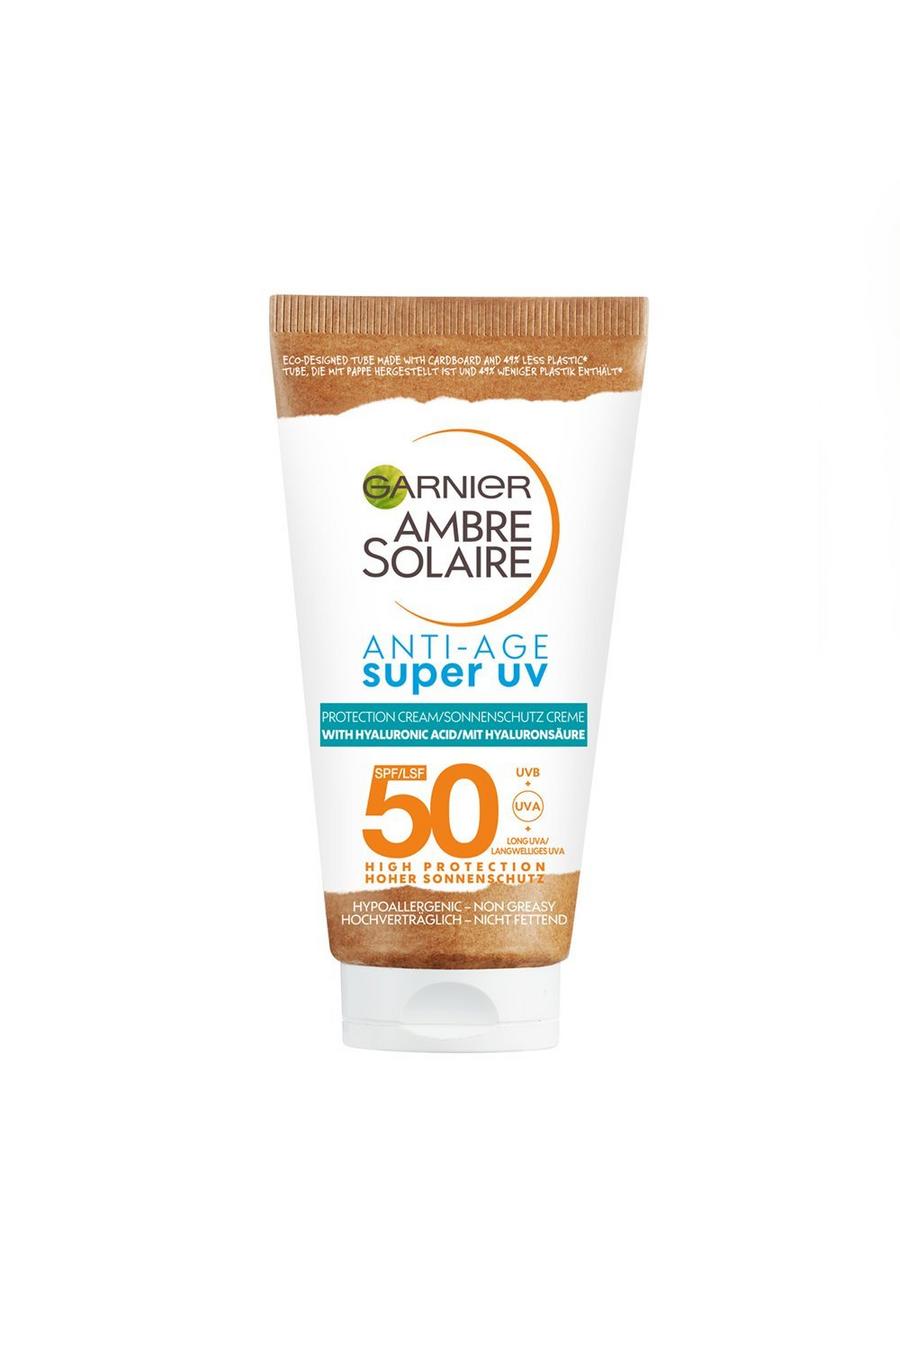 Garnier Ambre Solaire Anti-Age-Super-UV-Gesichtsschutzcreme SPF50 50ml, White